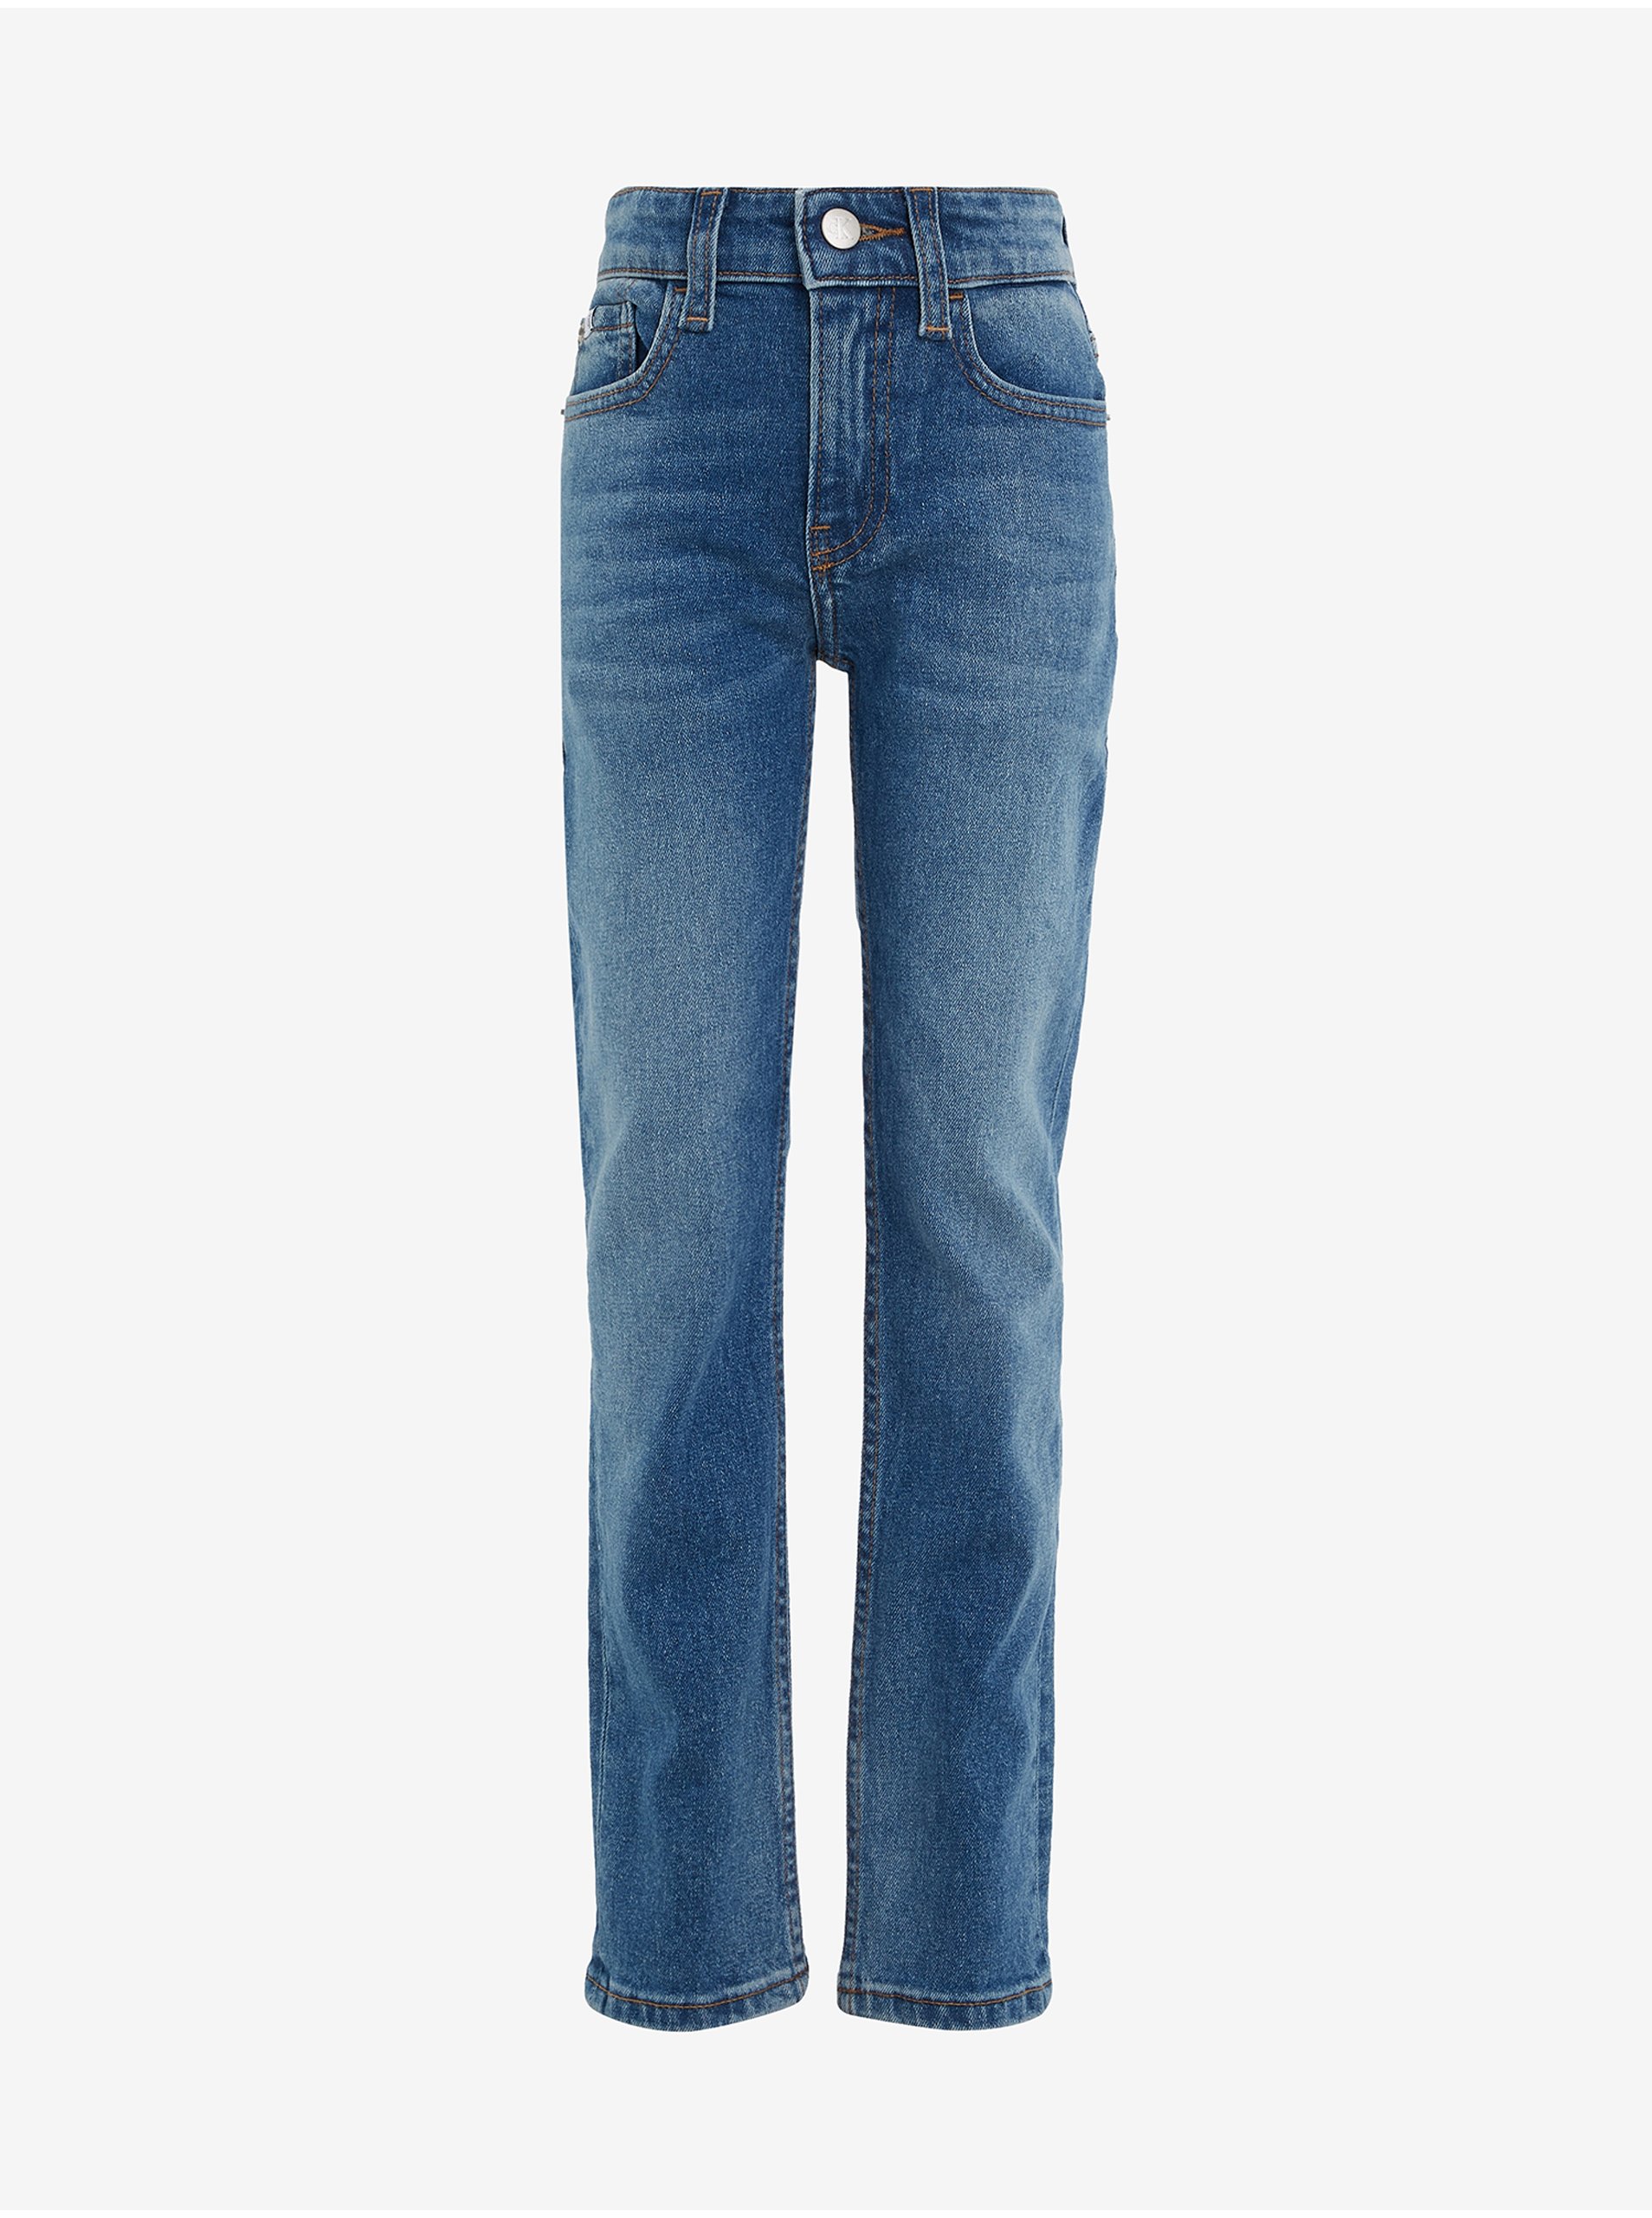 Lacno Modré chlapčenské slim fit džínsy modrá Calvin Klein Jeans